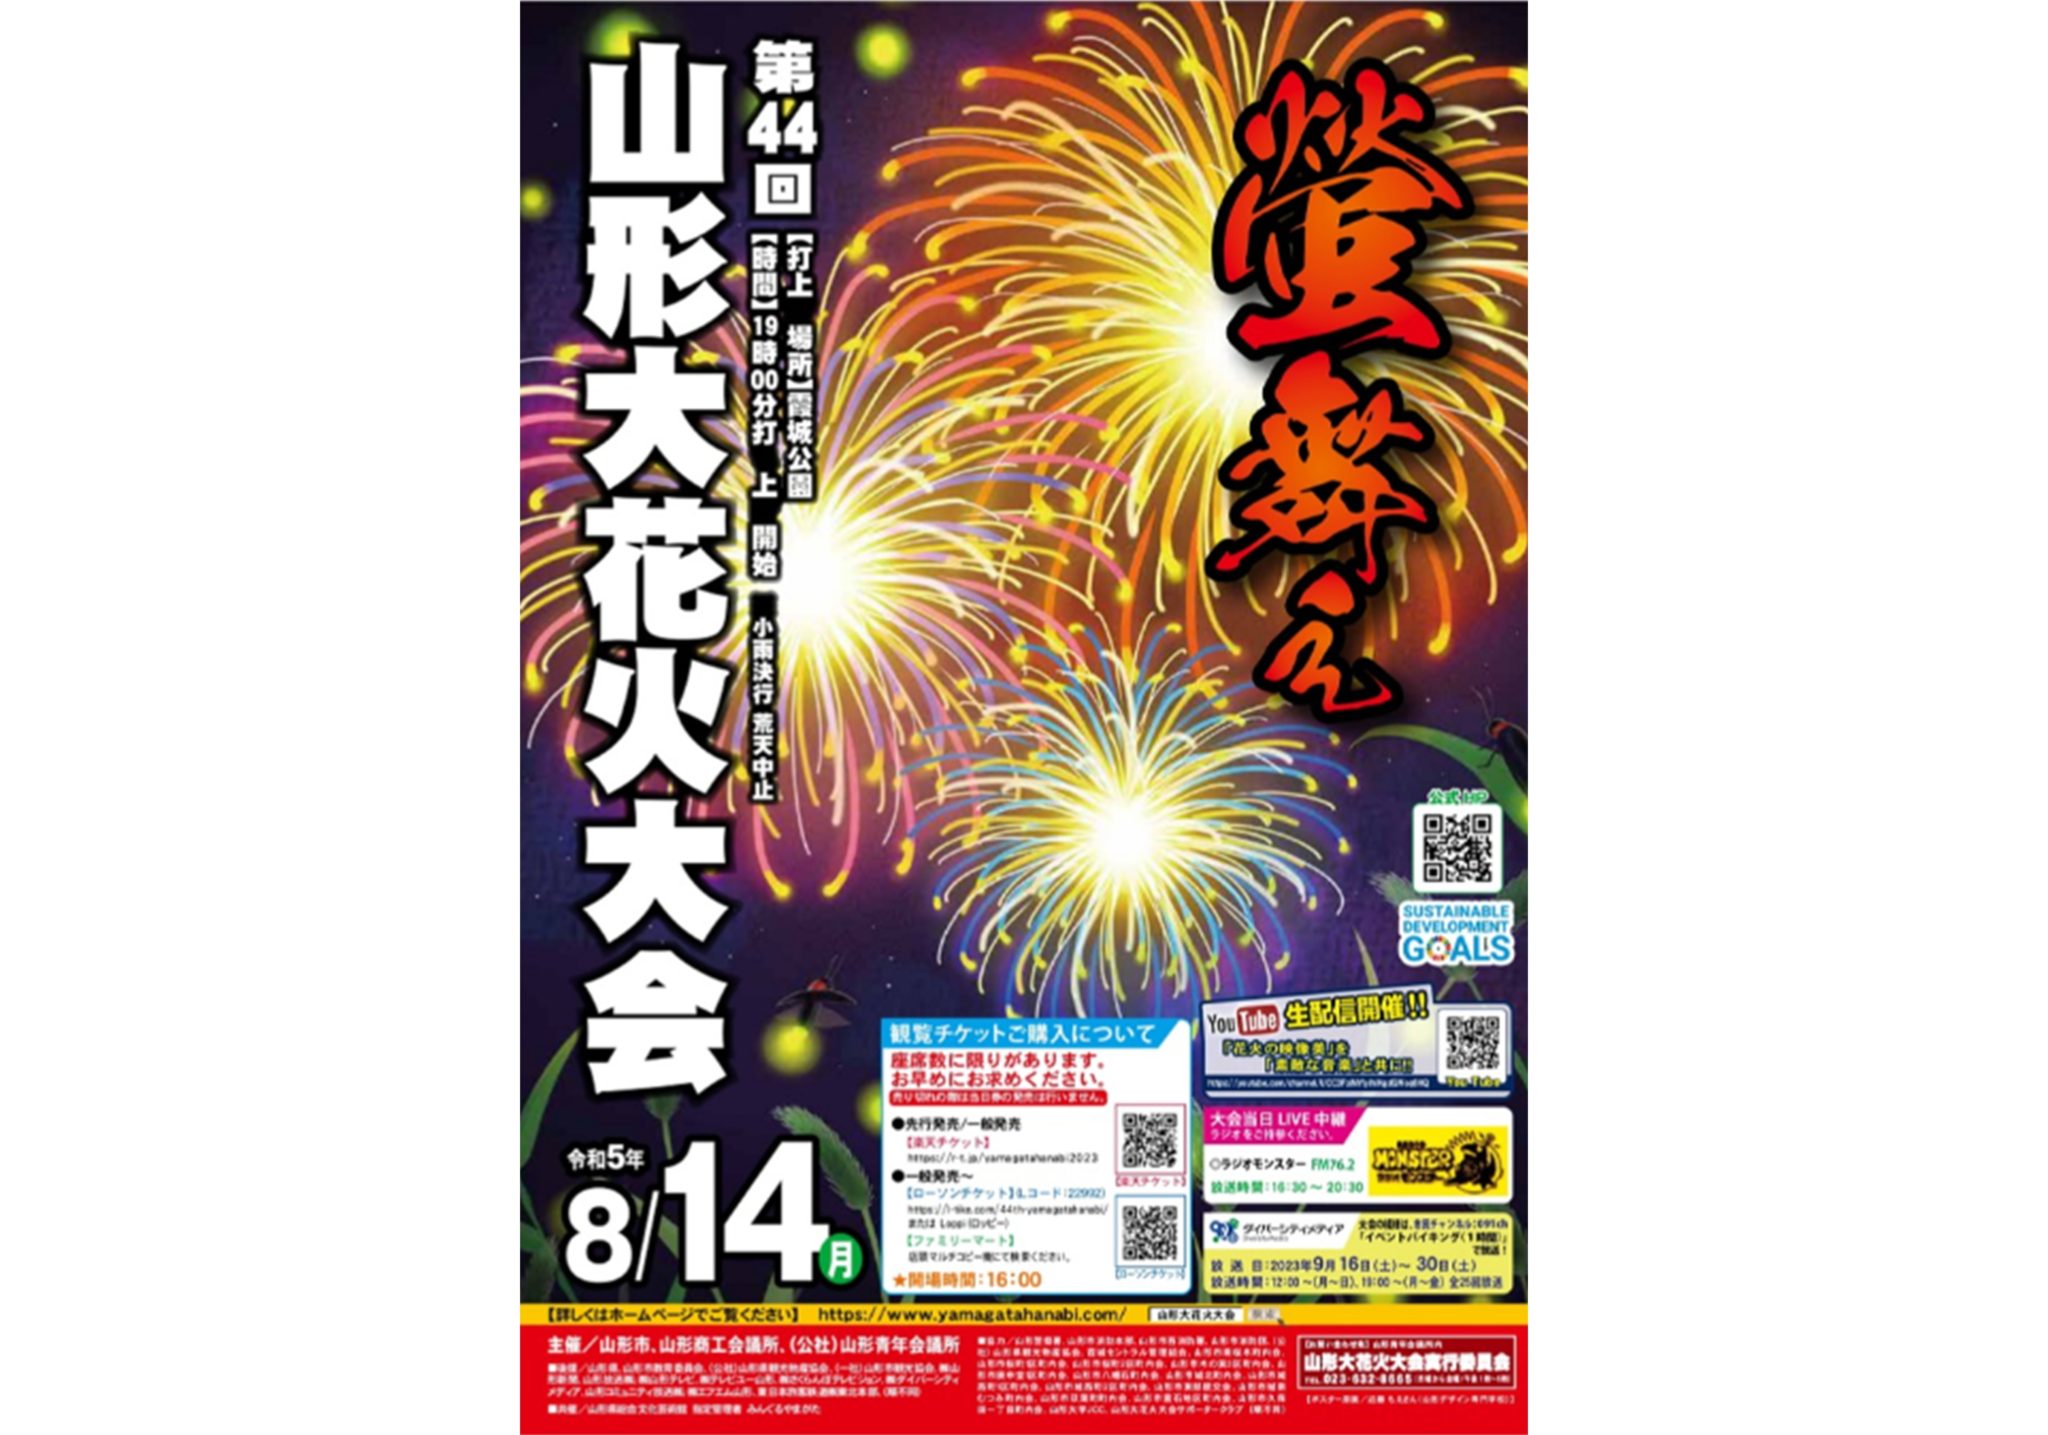 Yamagata Fireworks Festival